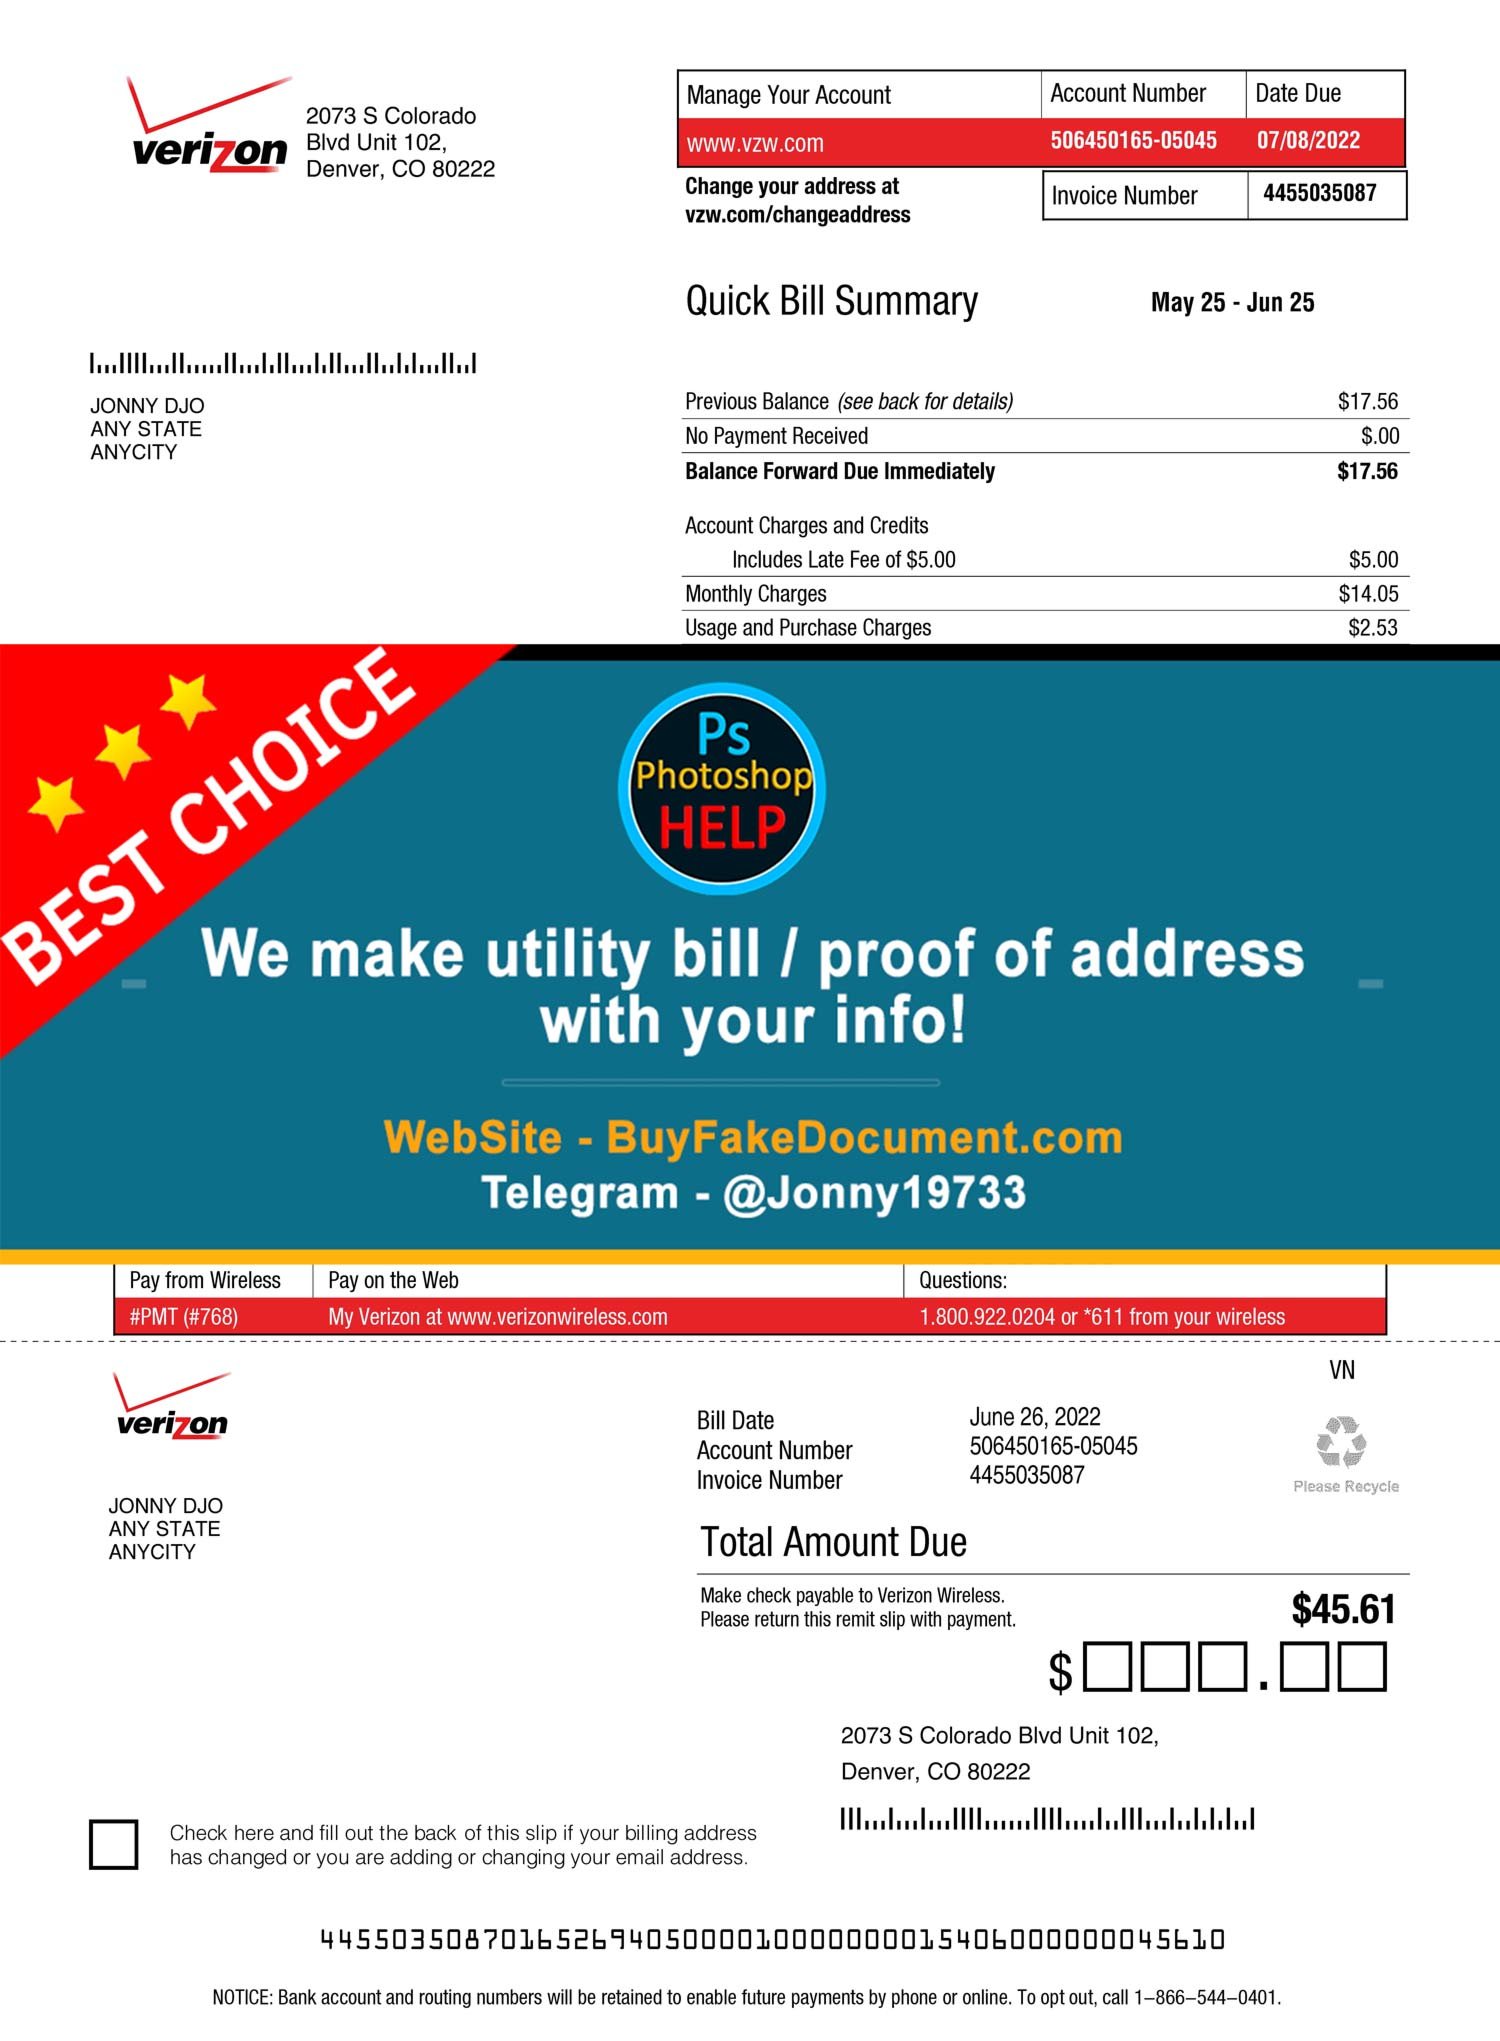 West Virginia Verizon utility bill Fake Utility bill